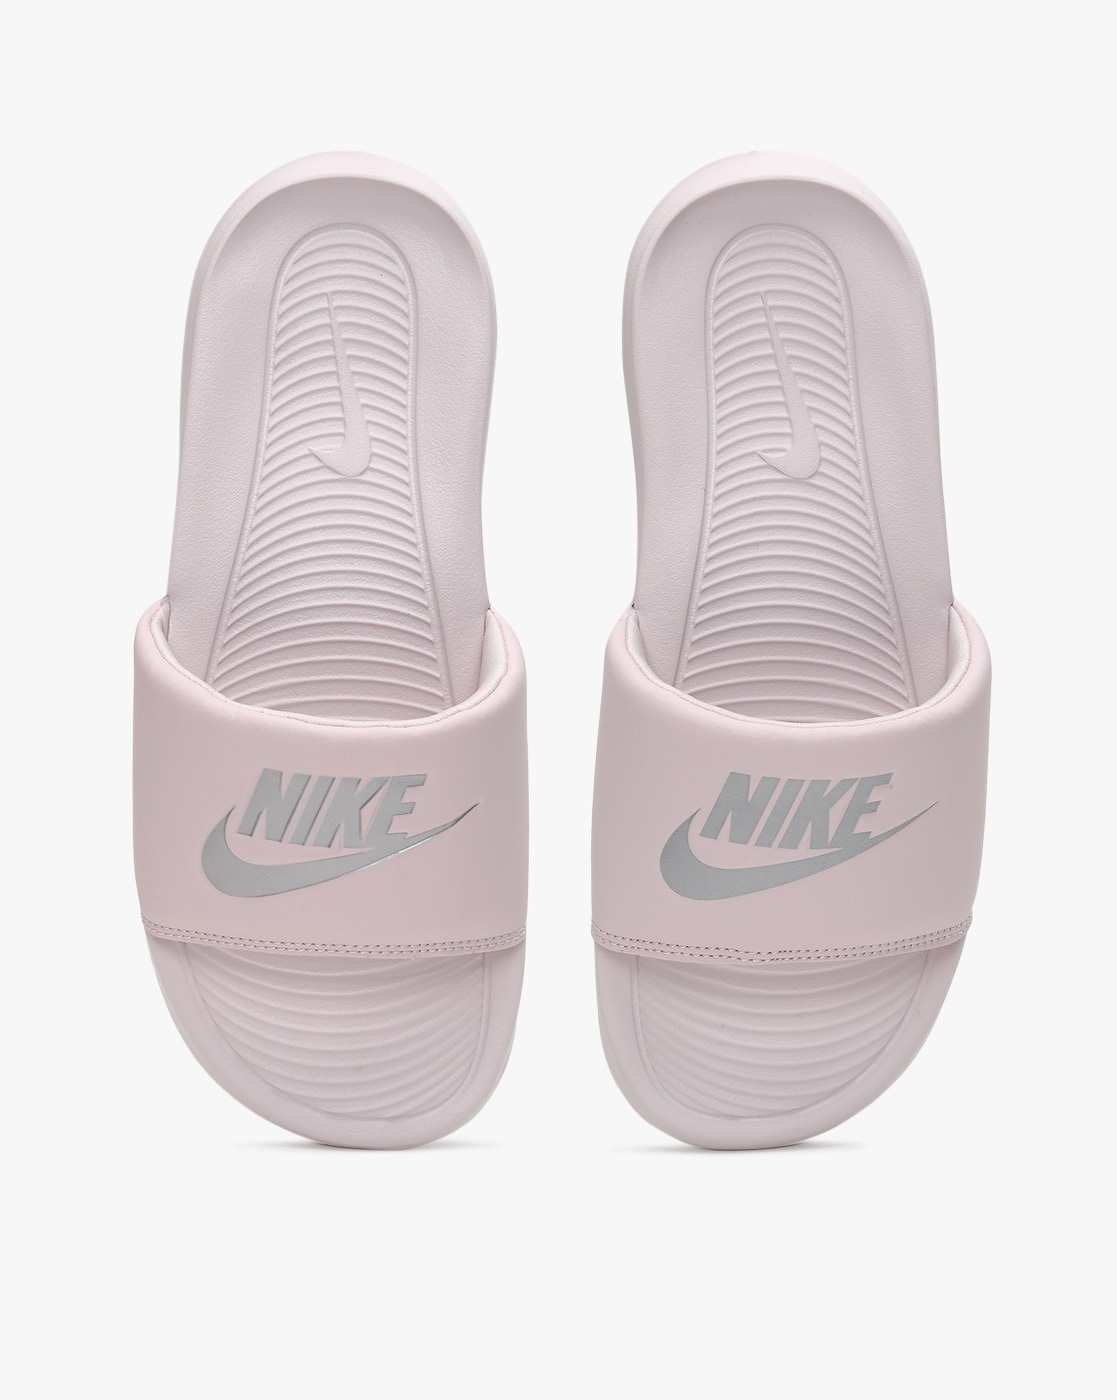 Nike Slides Mens Size 10 White Slippers | eBay-sgquangbinhtourist.com.vn